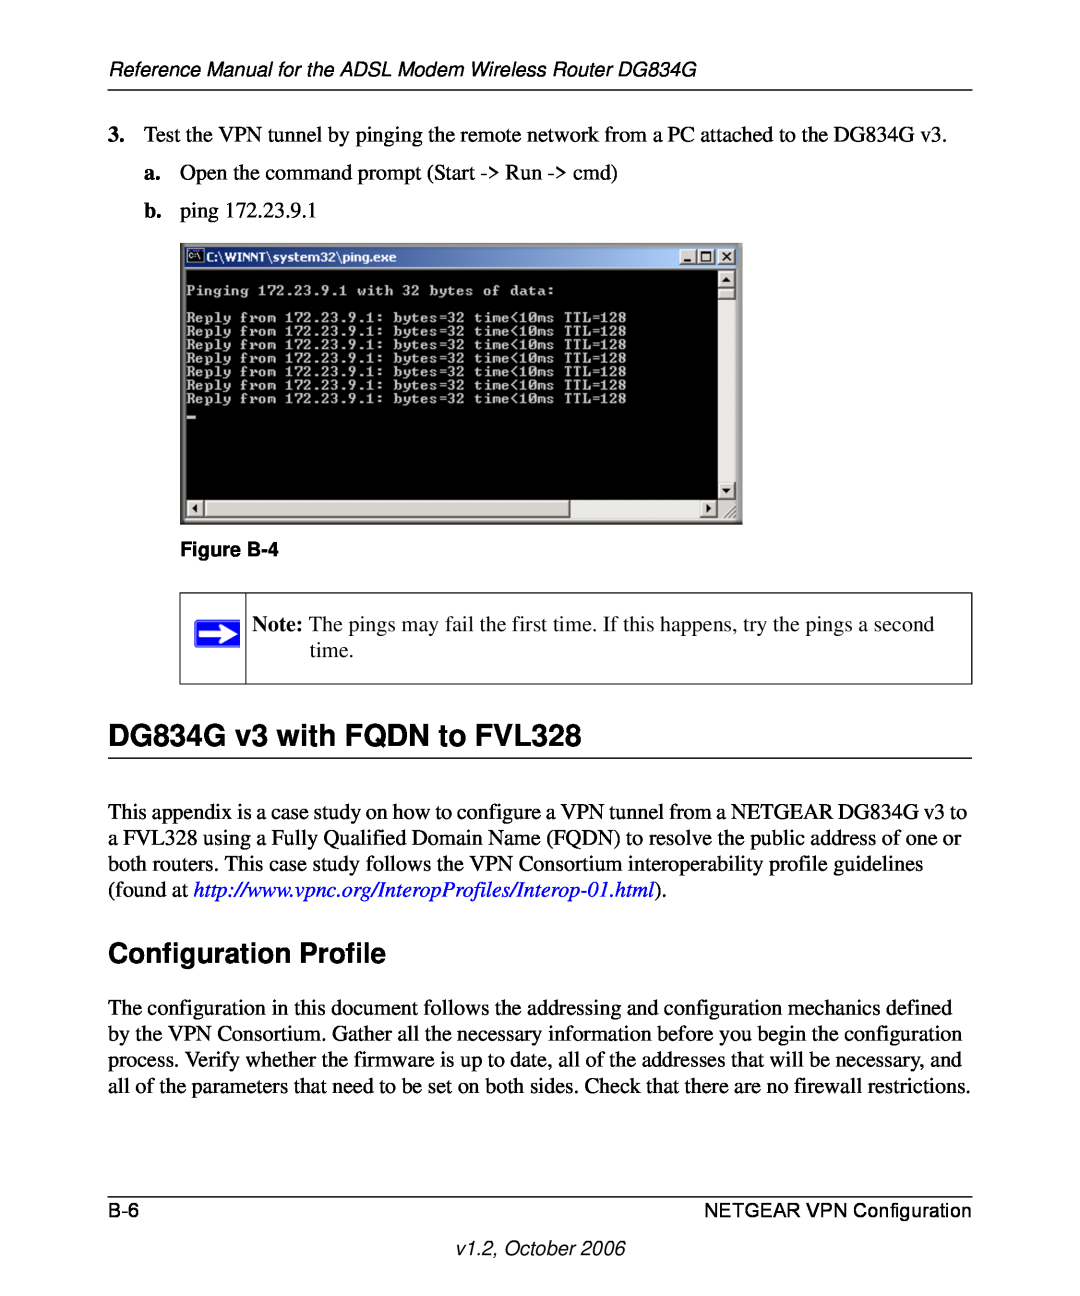 NETGEAR manual DG834G v3 with FQDN to FVL328, Configuration Profile, Figure B-4 